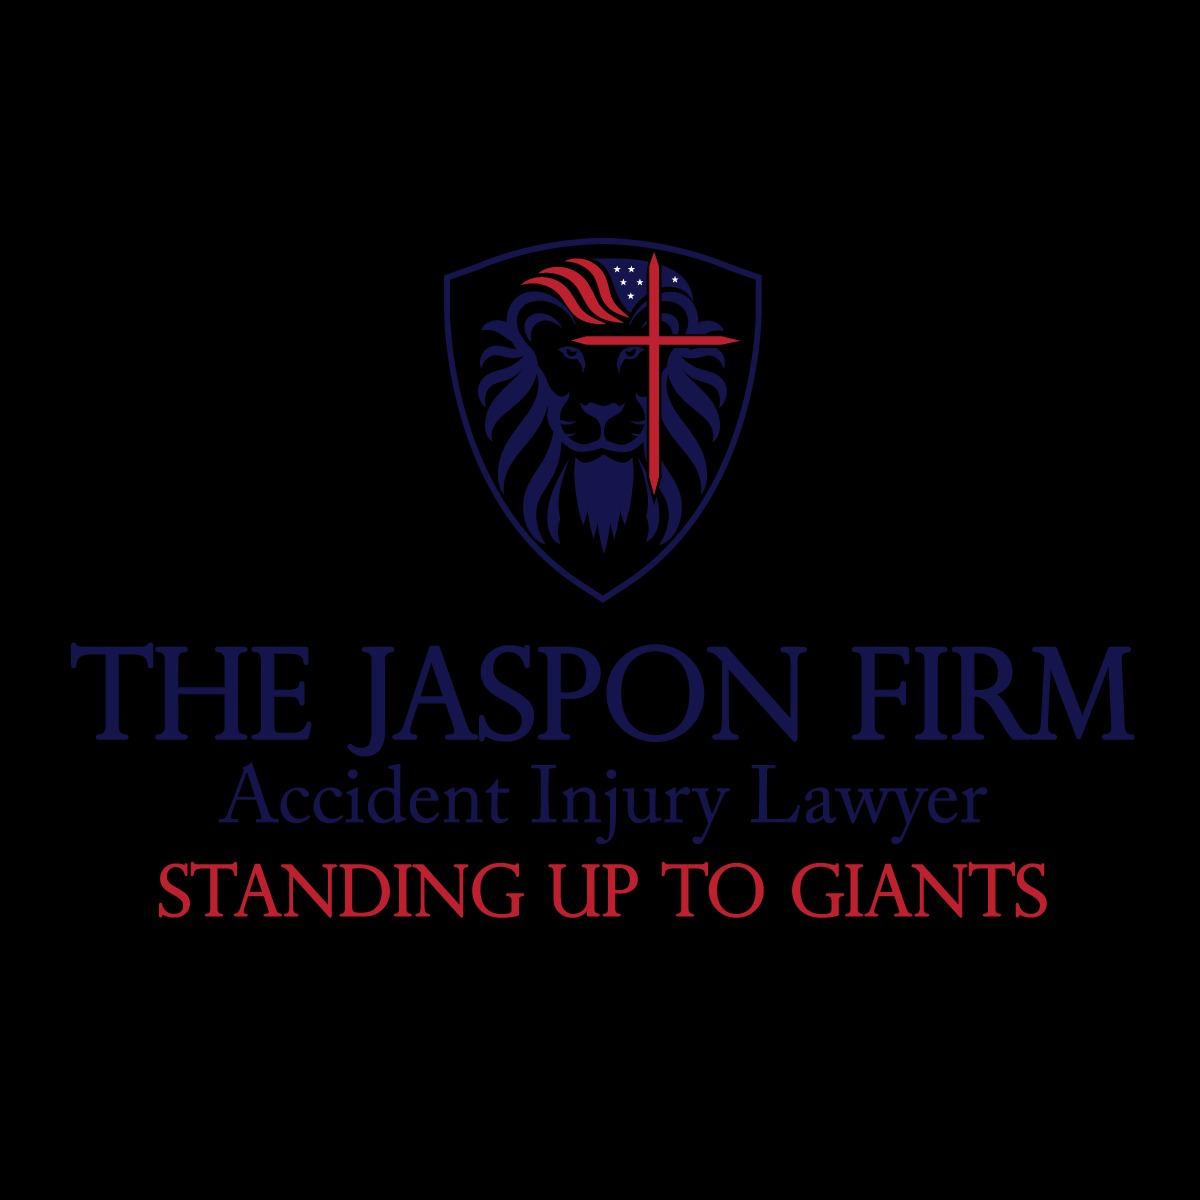 The Jaspon Firm Accident Injury Lawyer, Orlando Car Accident Lawyer The Jaspon Firm Accident Injury Lawyer Orlando (407)513-9515